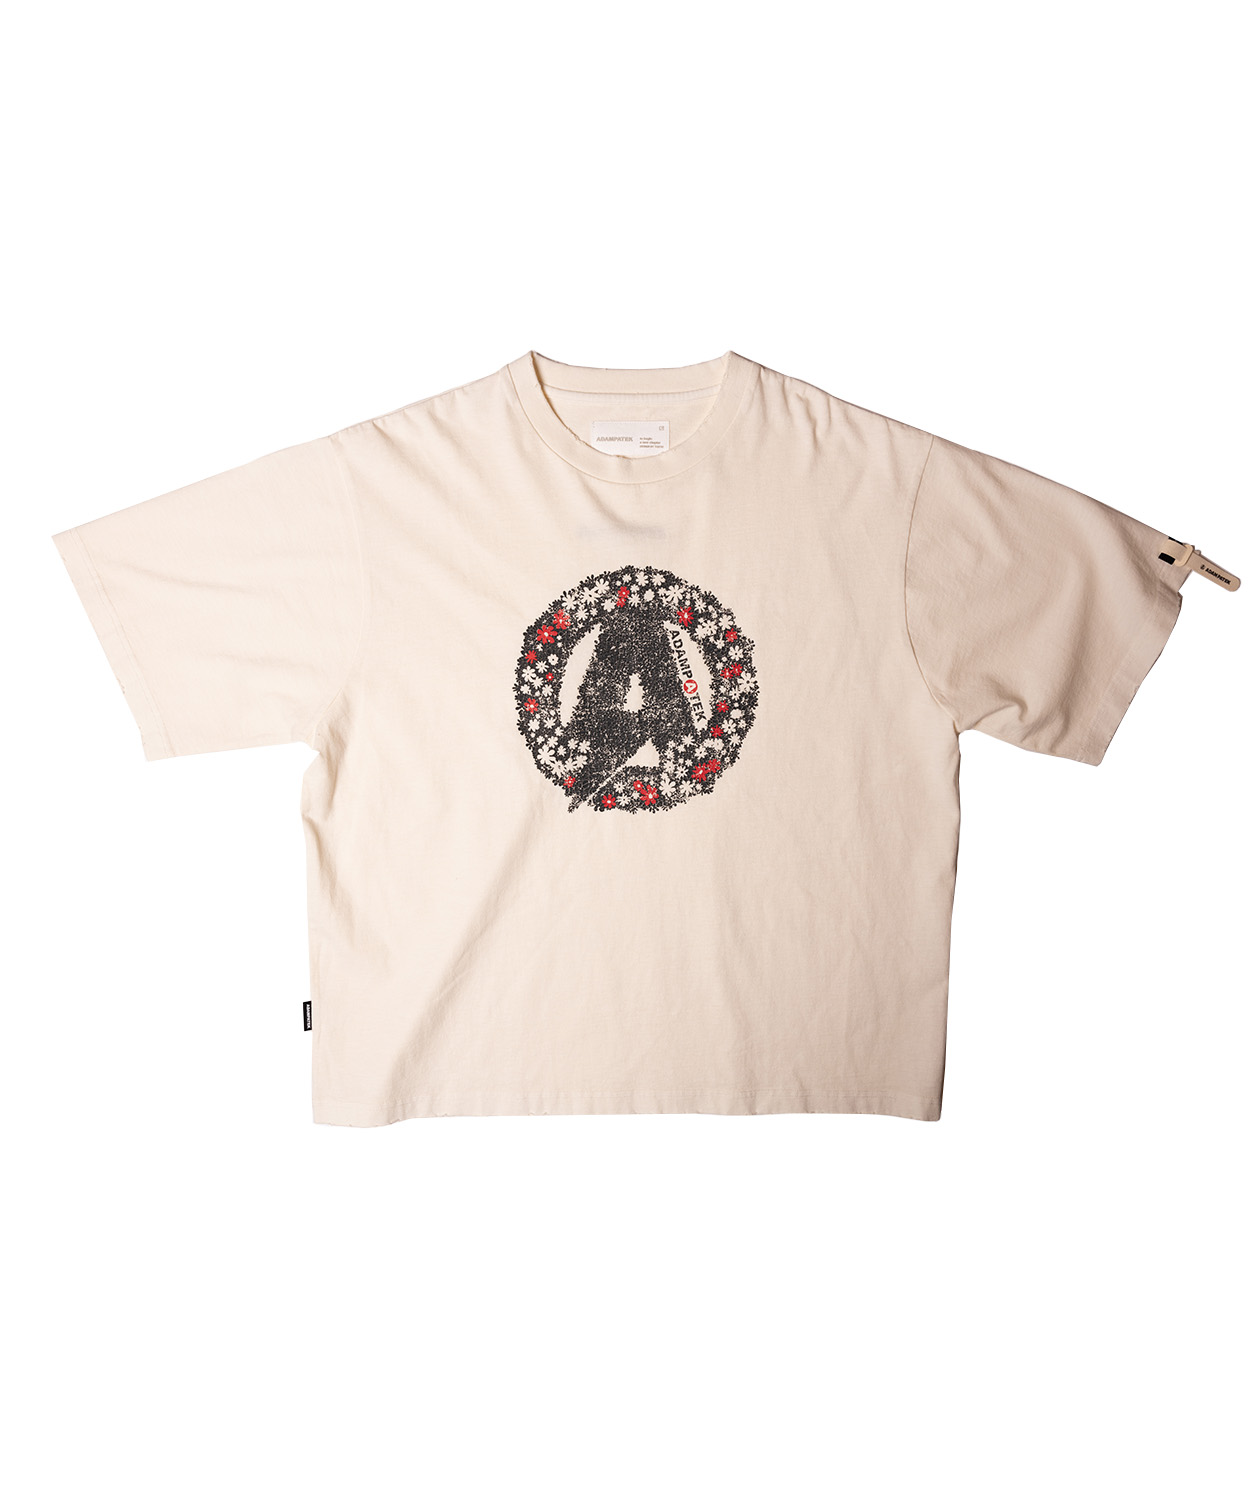 flower anarchy short sleeve pigment_AP2414024_Tシャツ